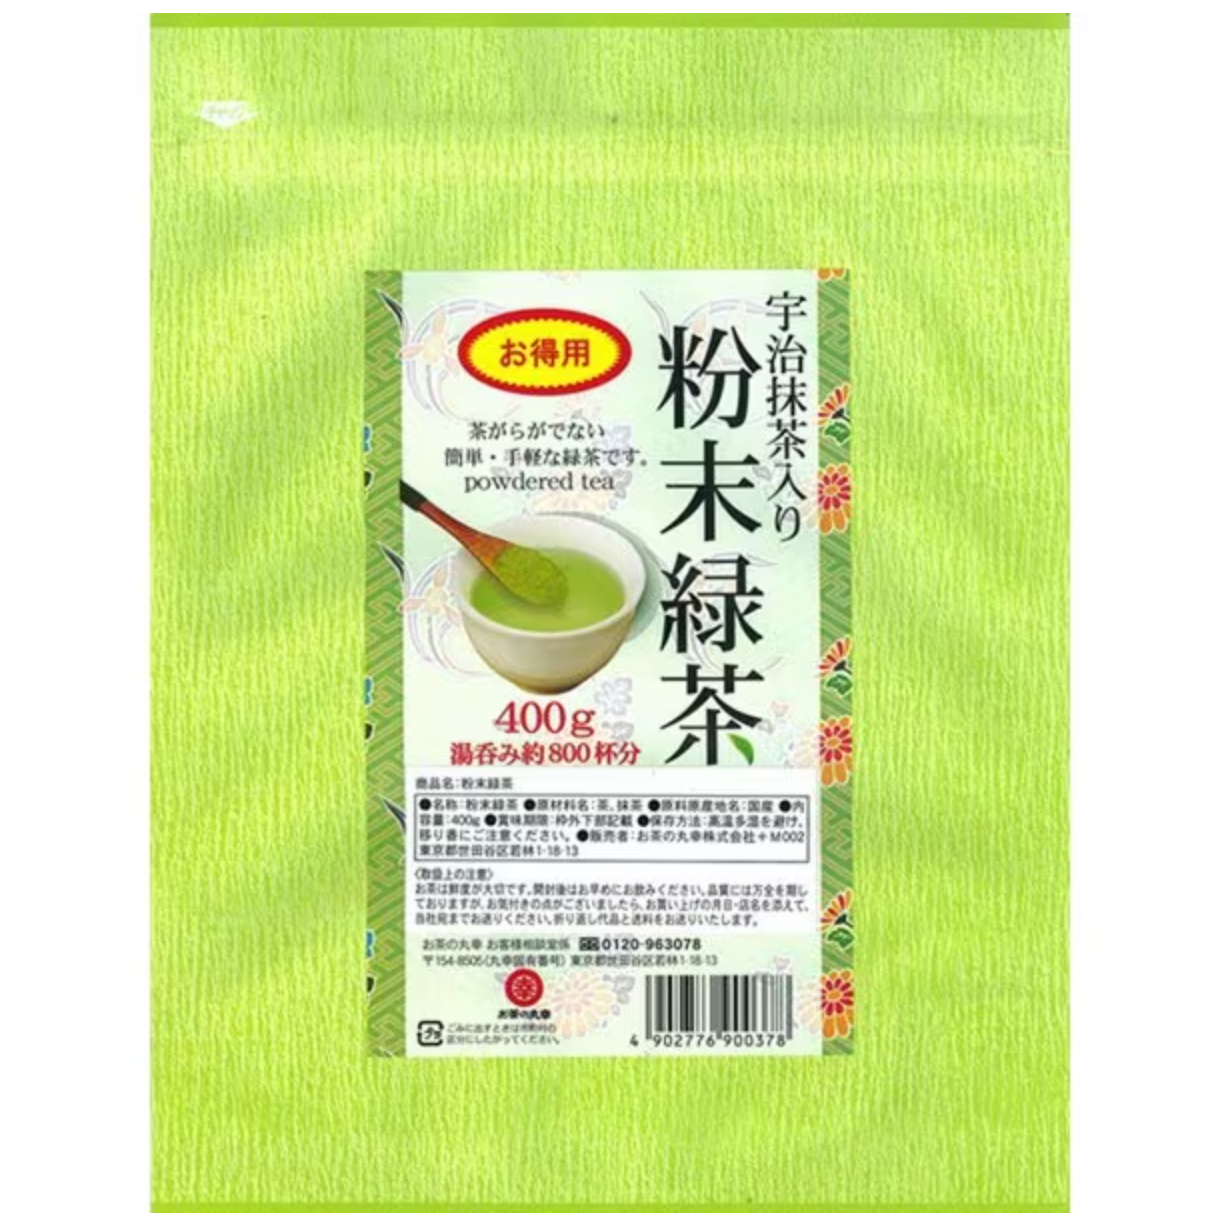 Ochanomaruko Commercial Green Tea Powder with Uji Matcha 400g